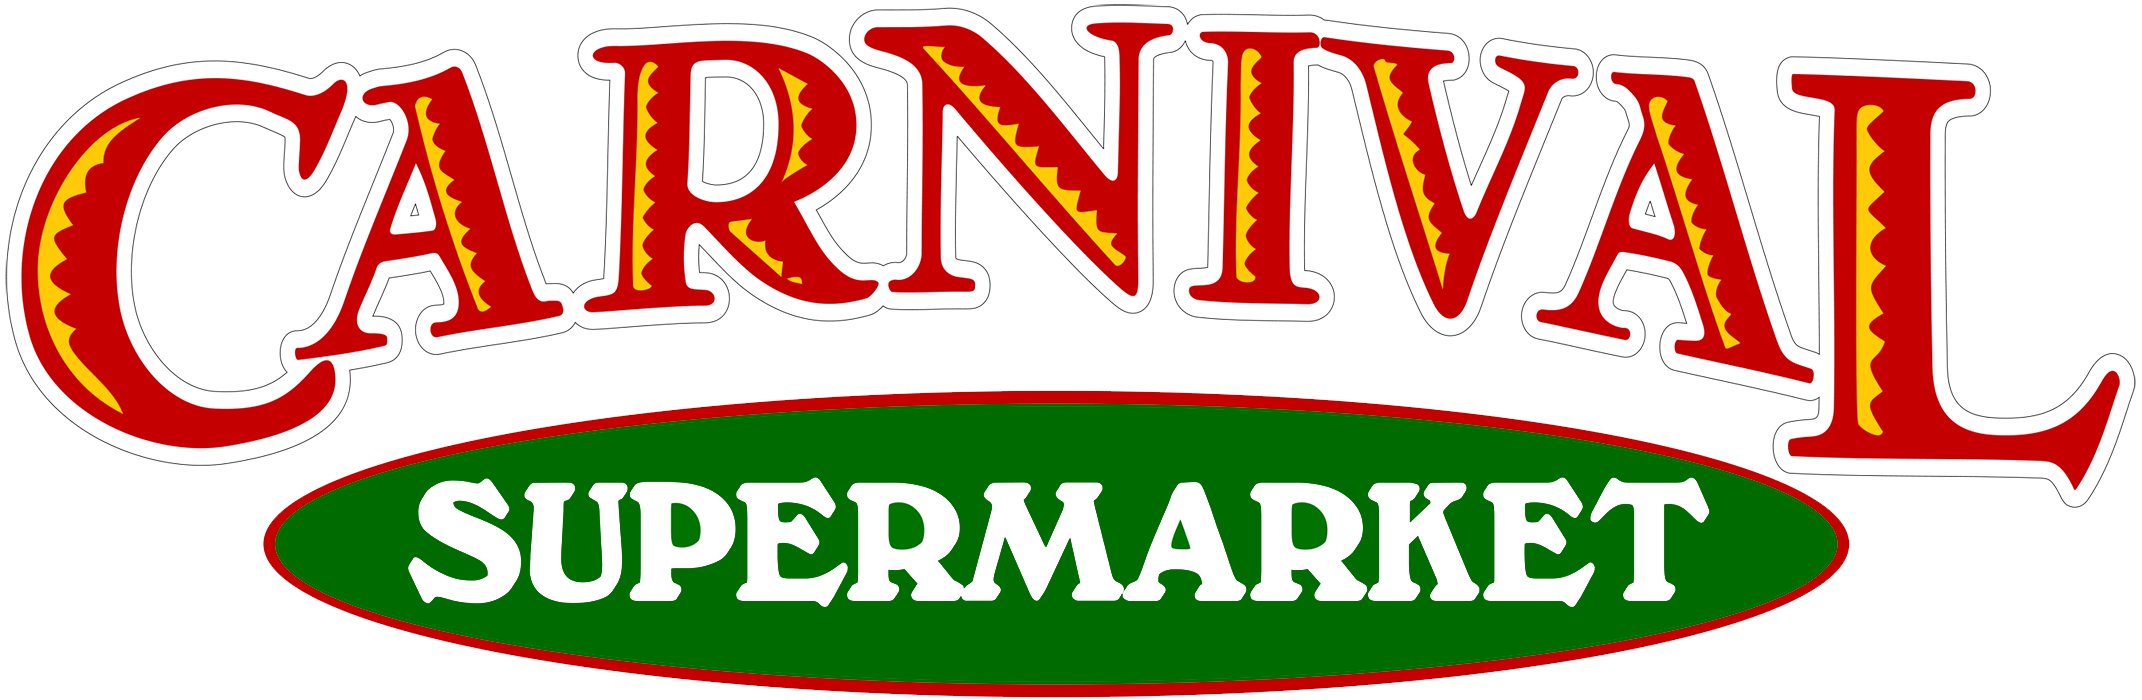 Carnival Supermarket